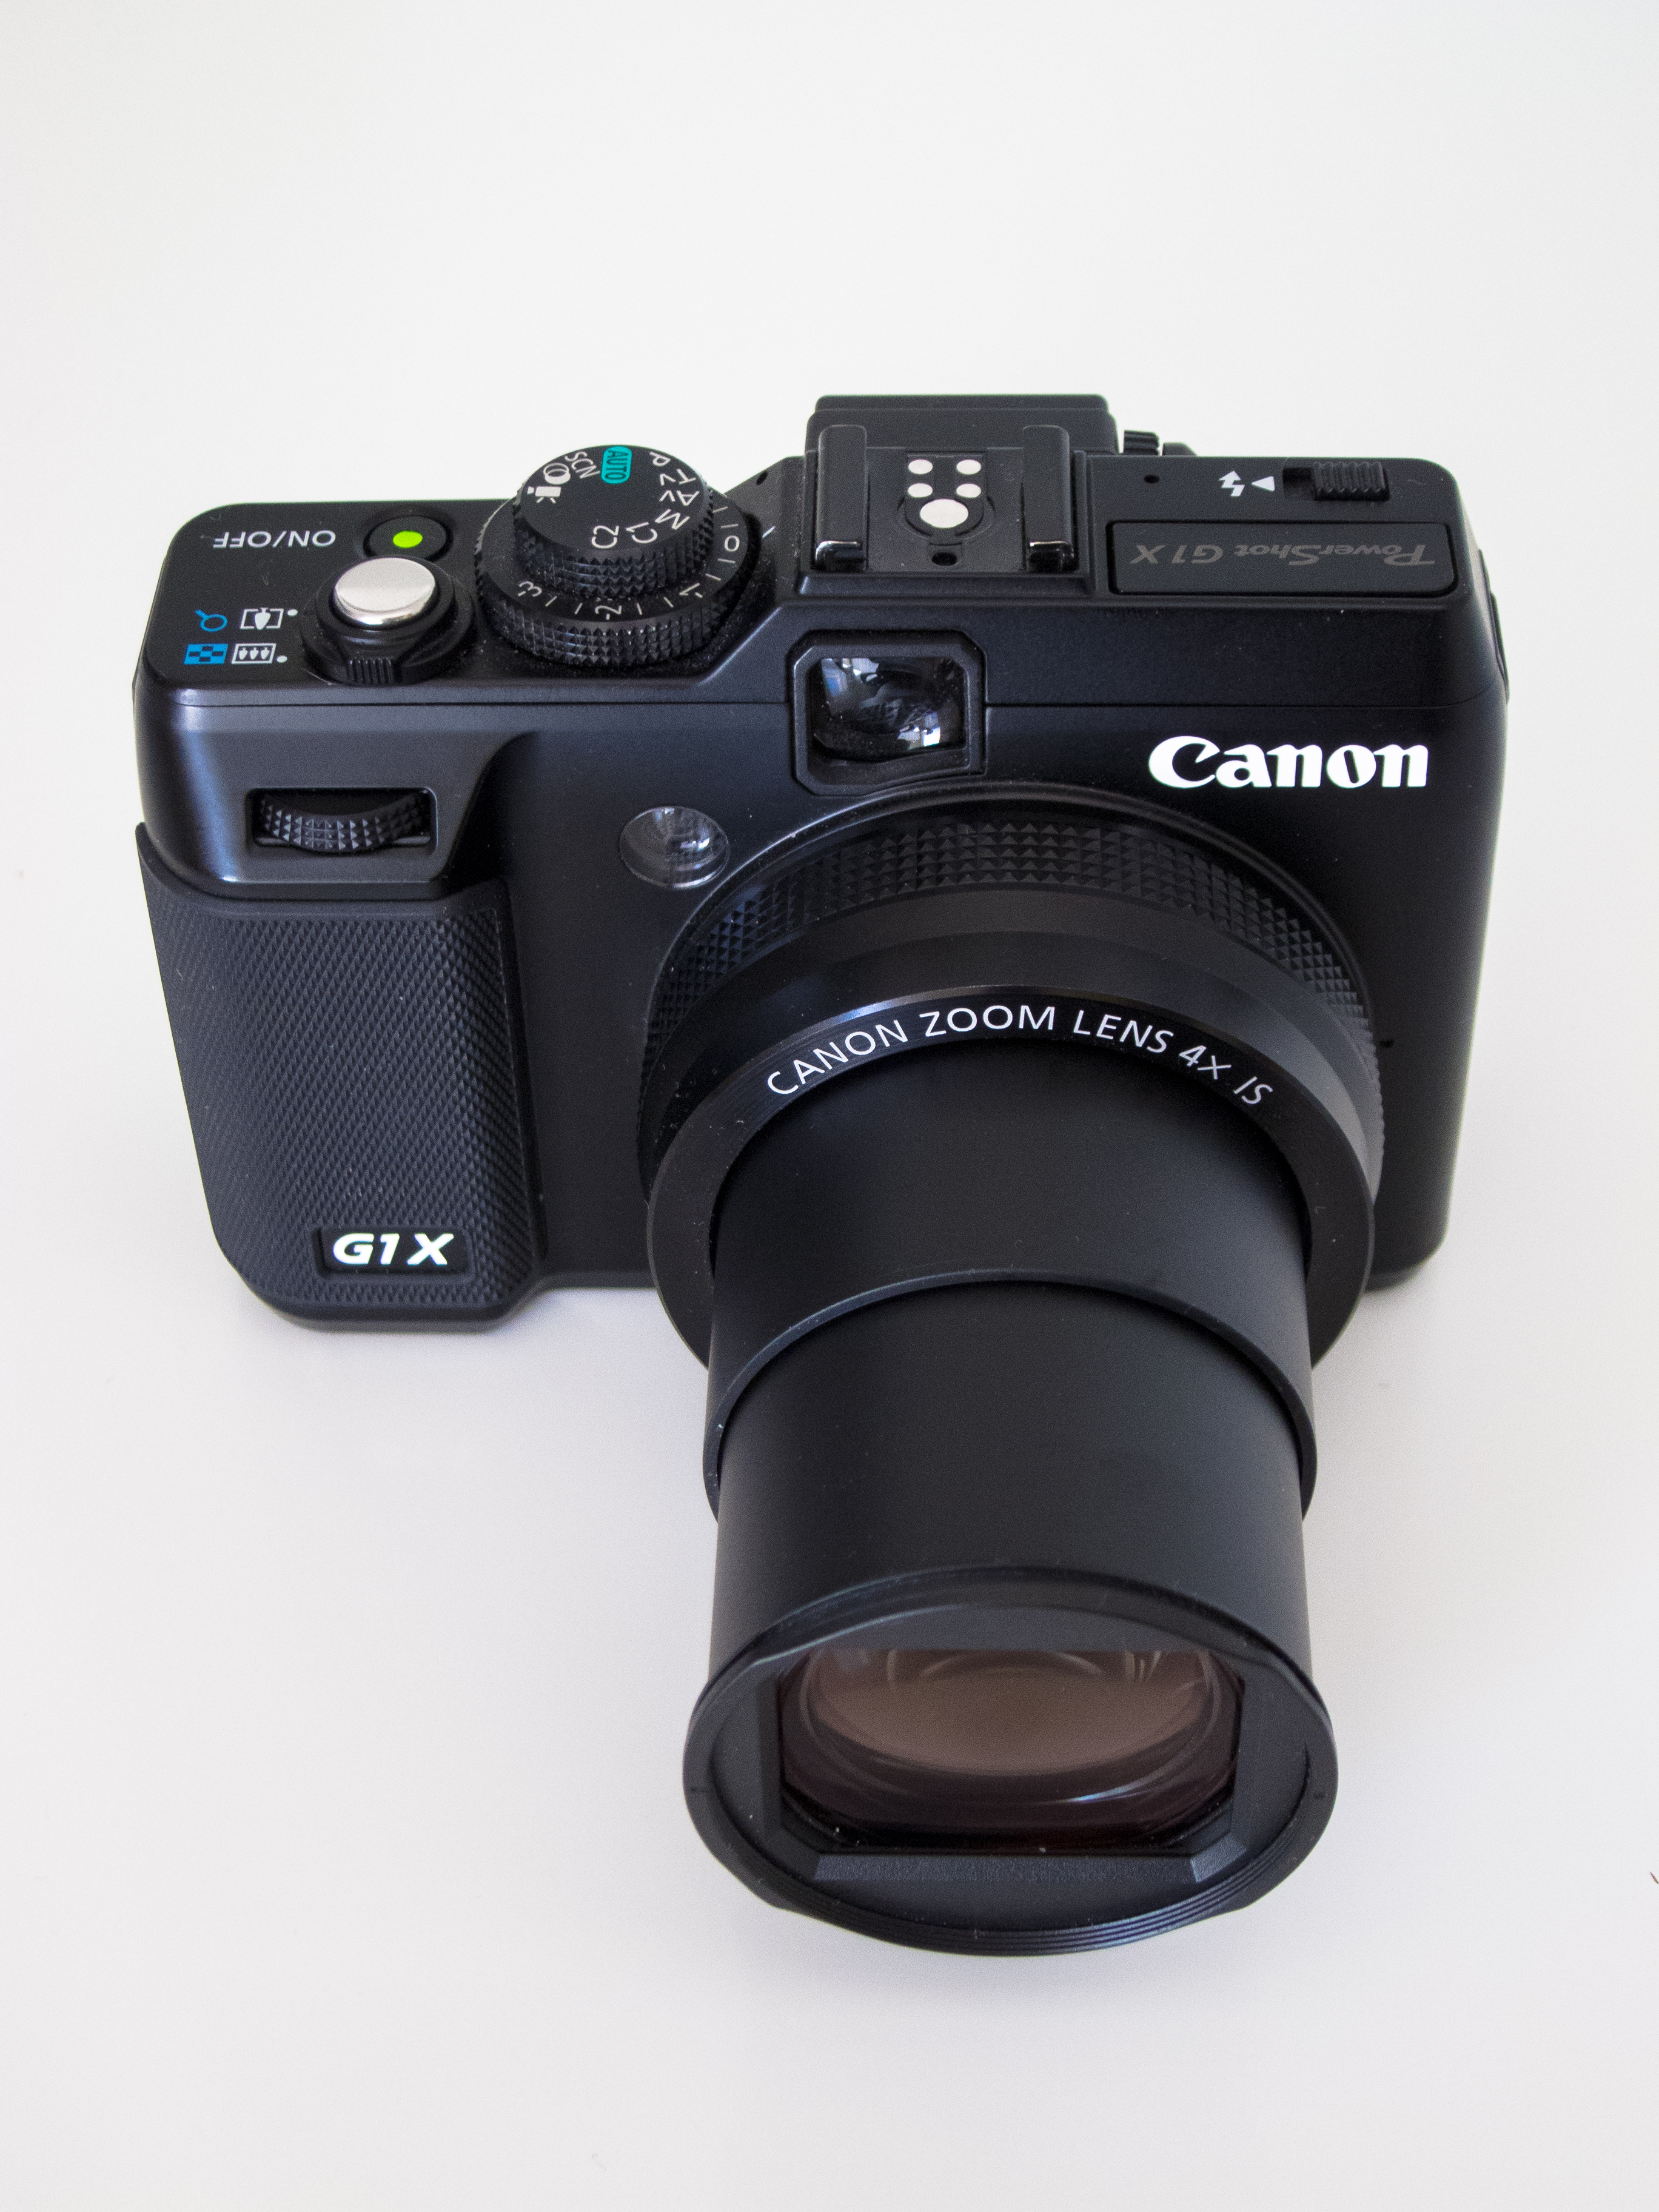 Canon PowerShot G1 X - Wikipedia